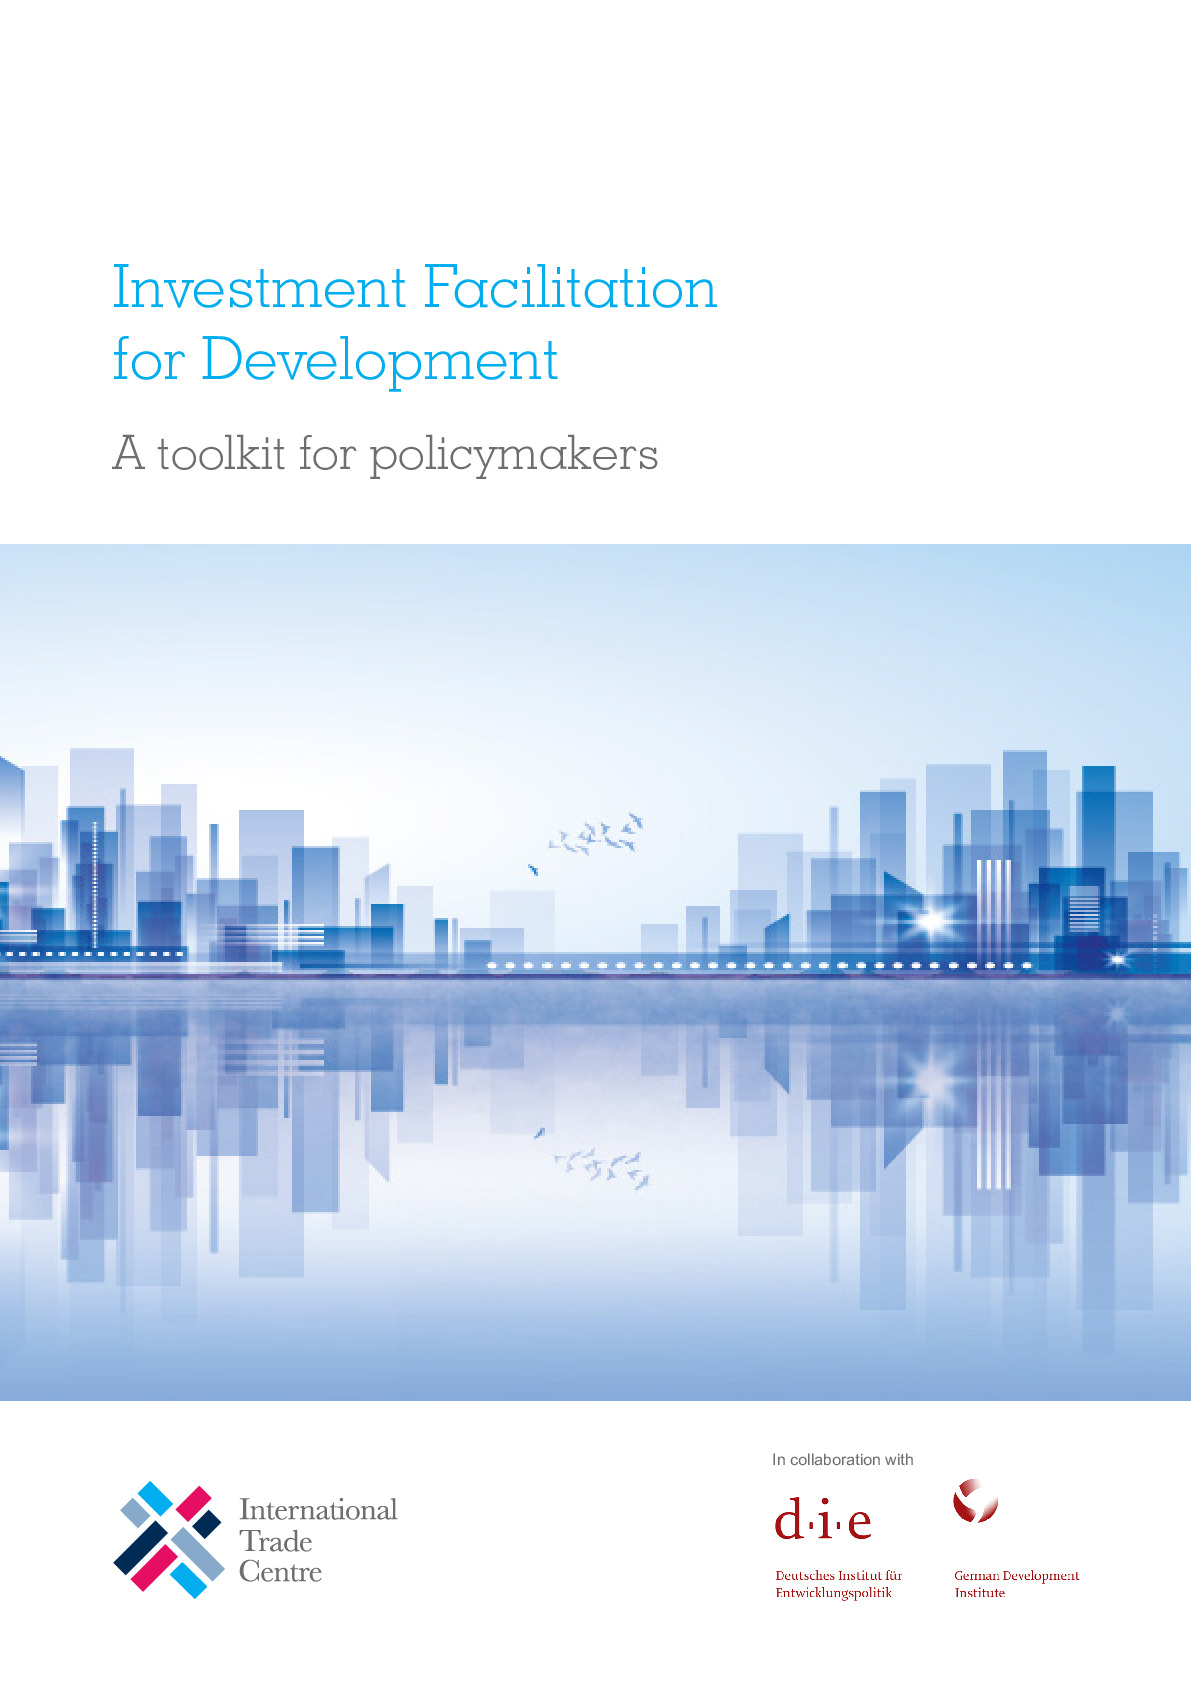 investment_facilitation_for_development_rev.low-res